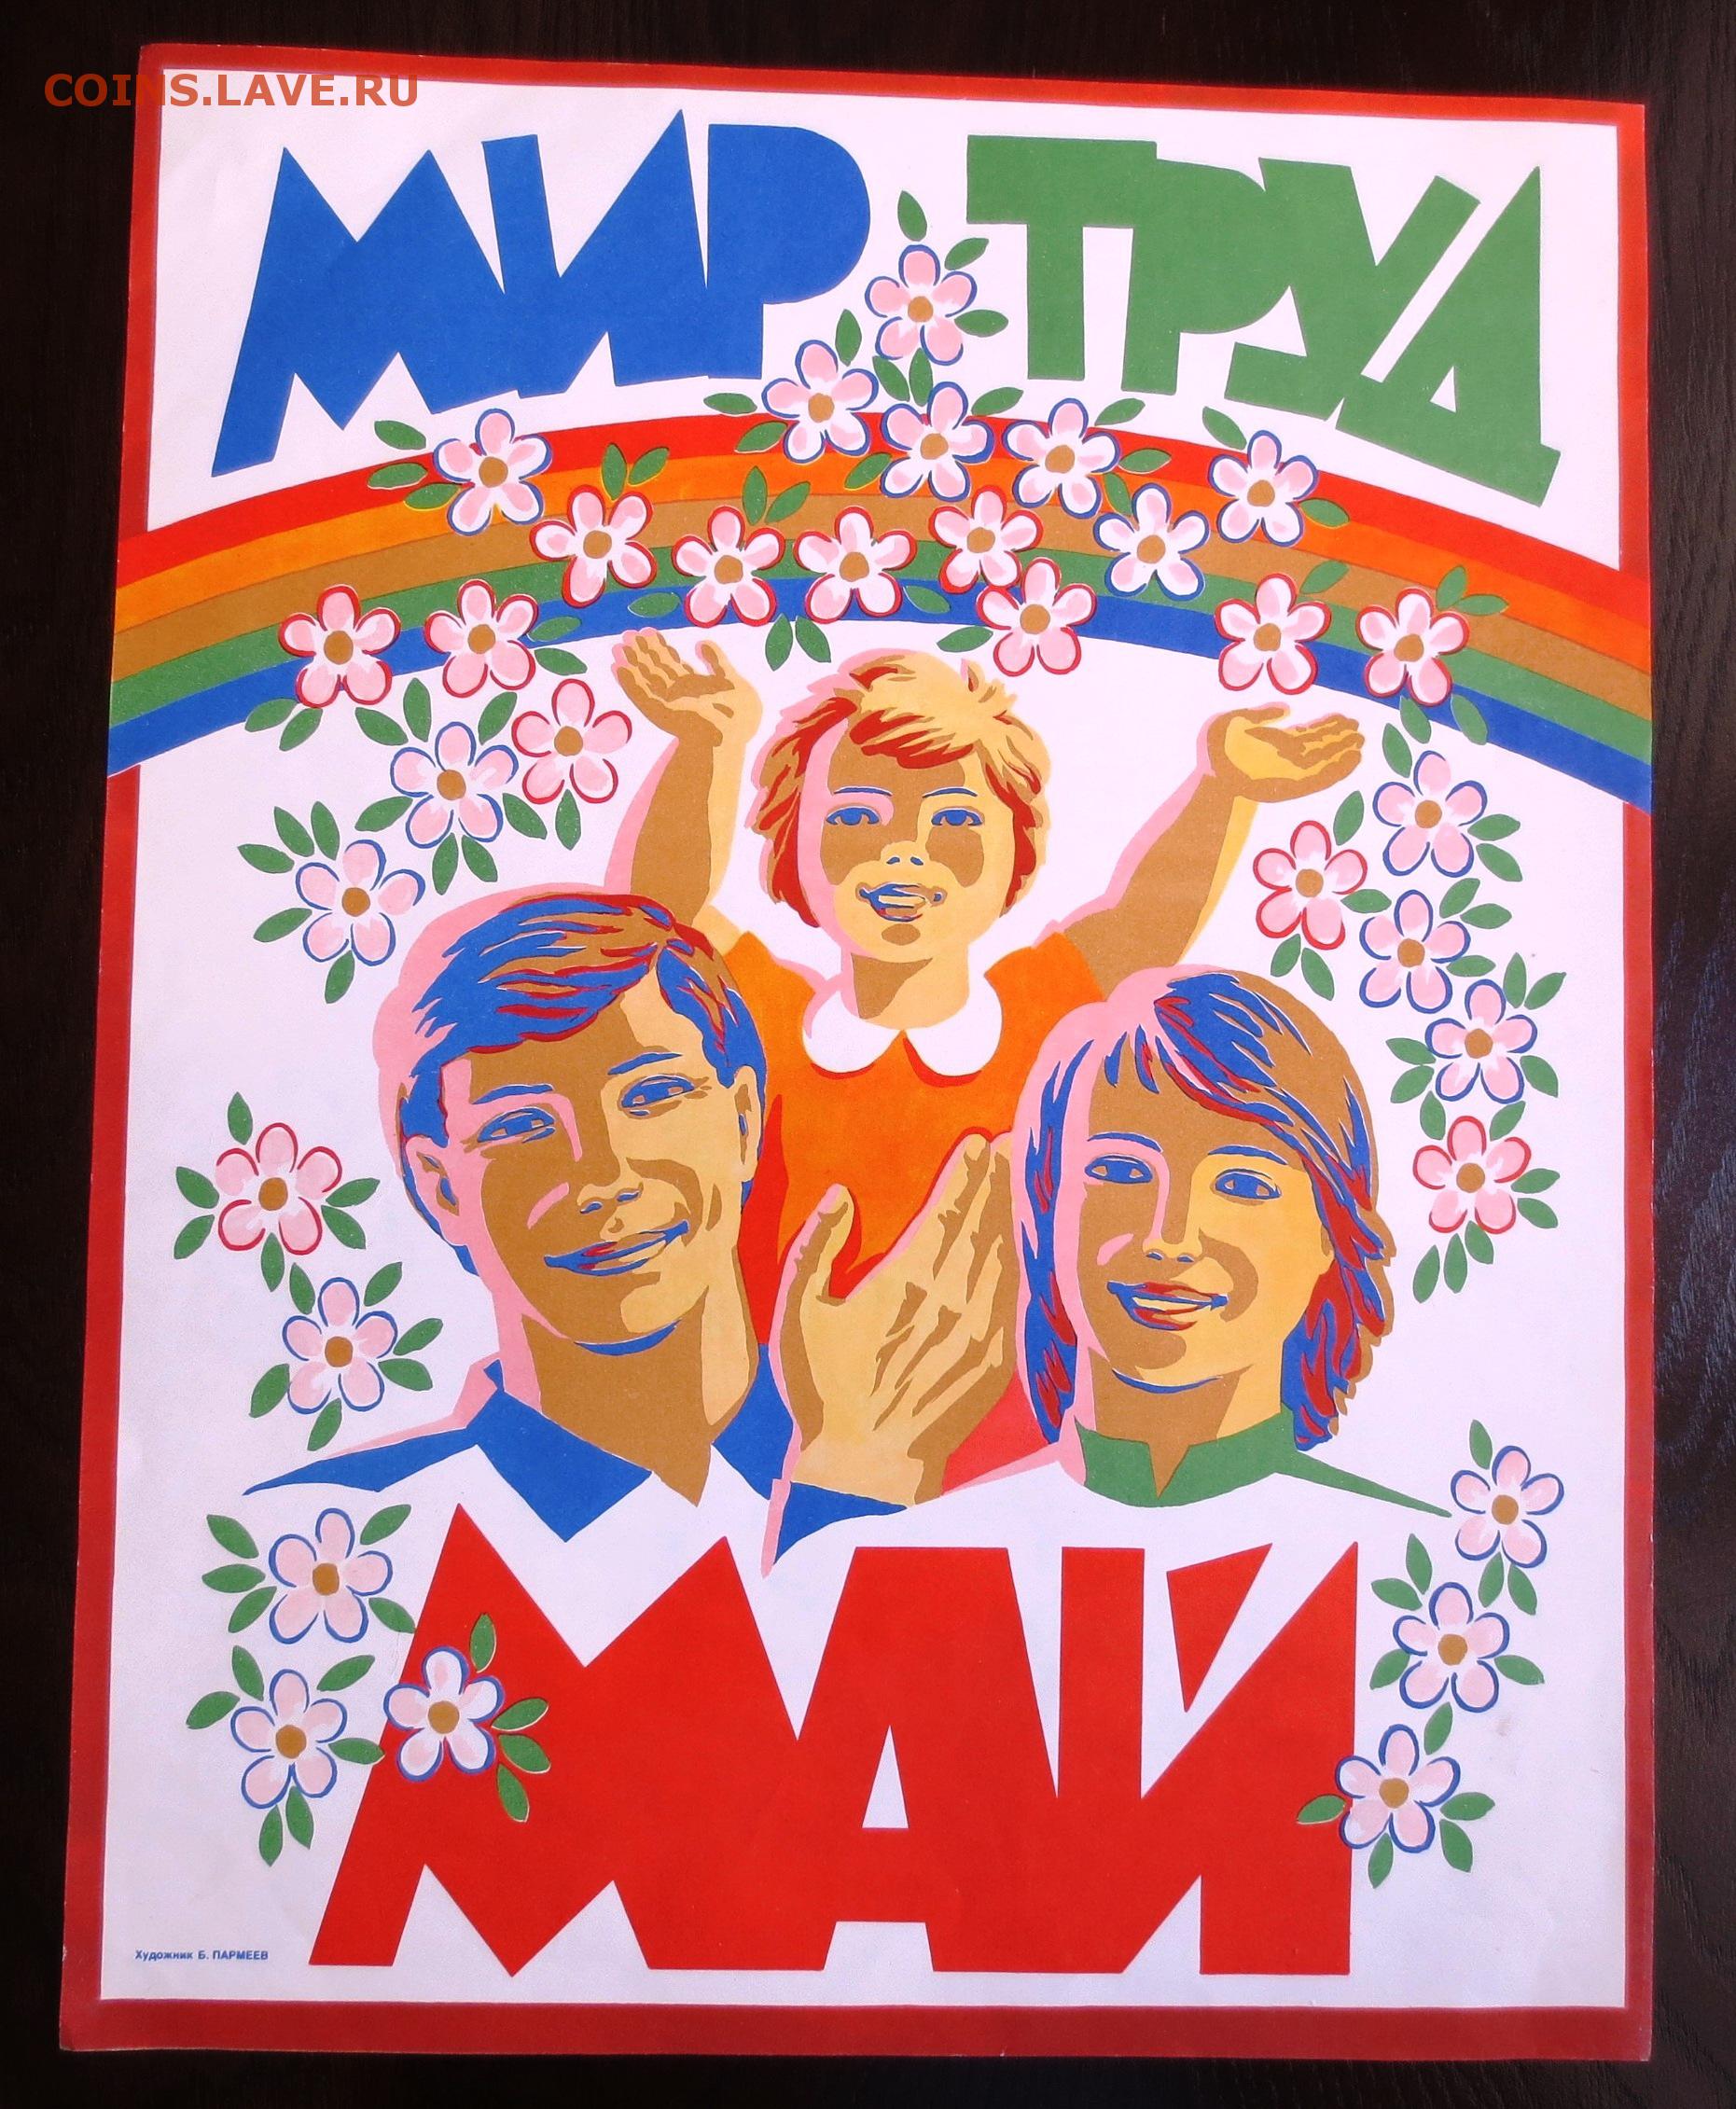 Слоганы май. 1 Мая плакат. Лозунги 90-х годов. Мир труд май лозунг. Плакаты 80-х годов.